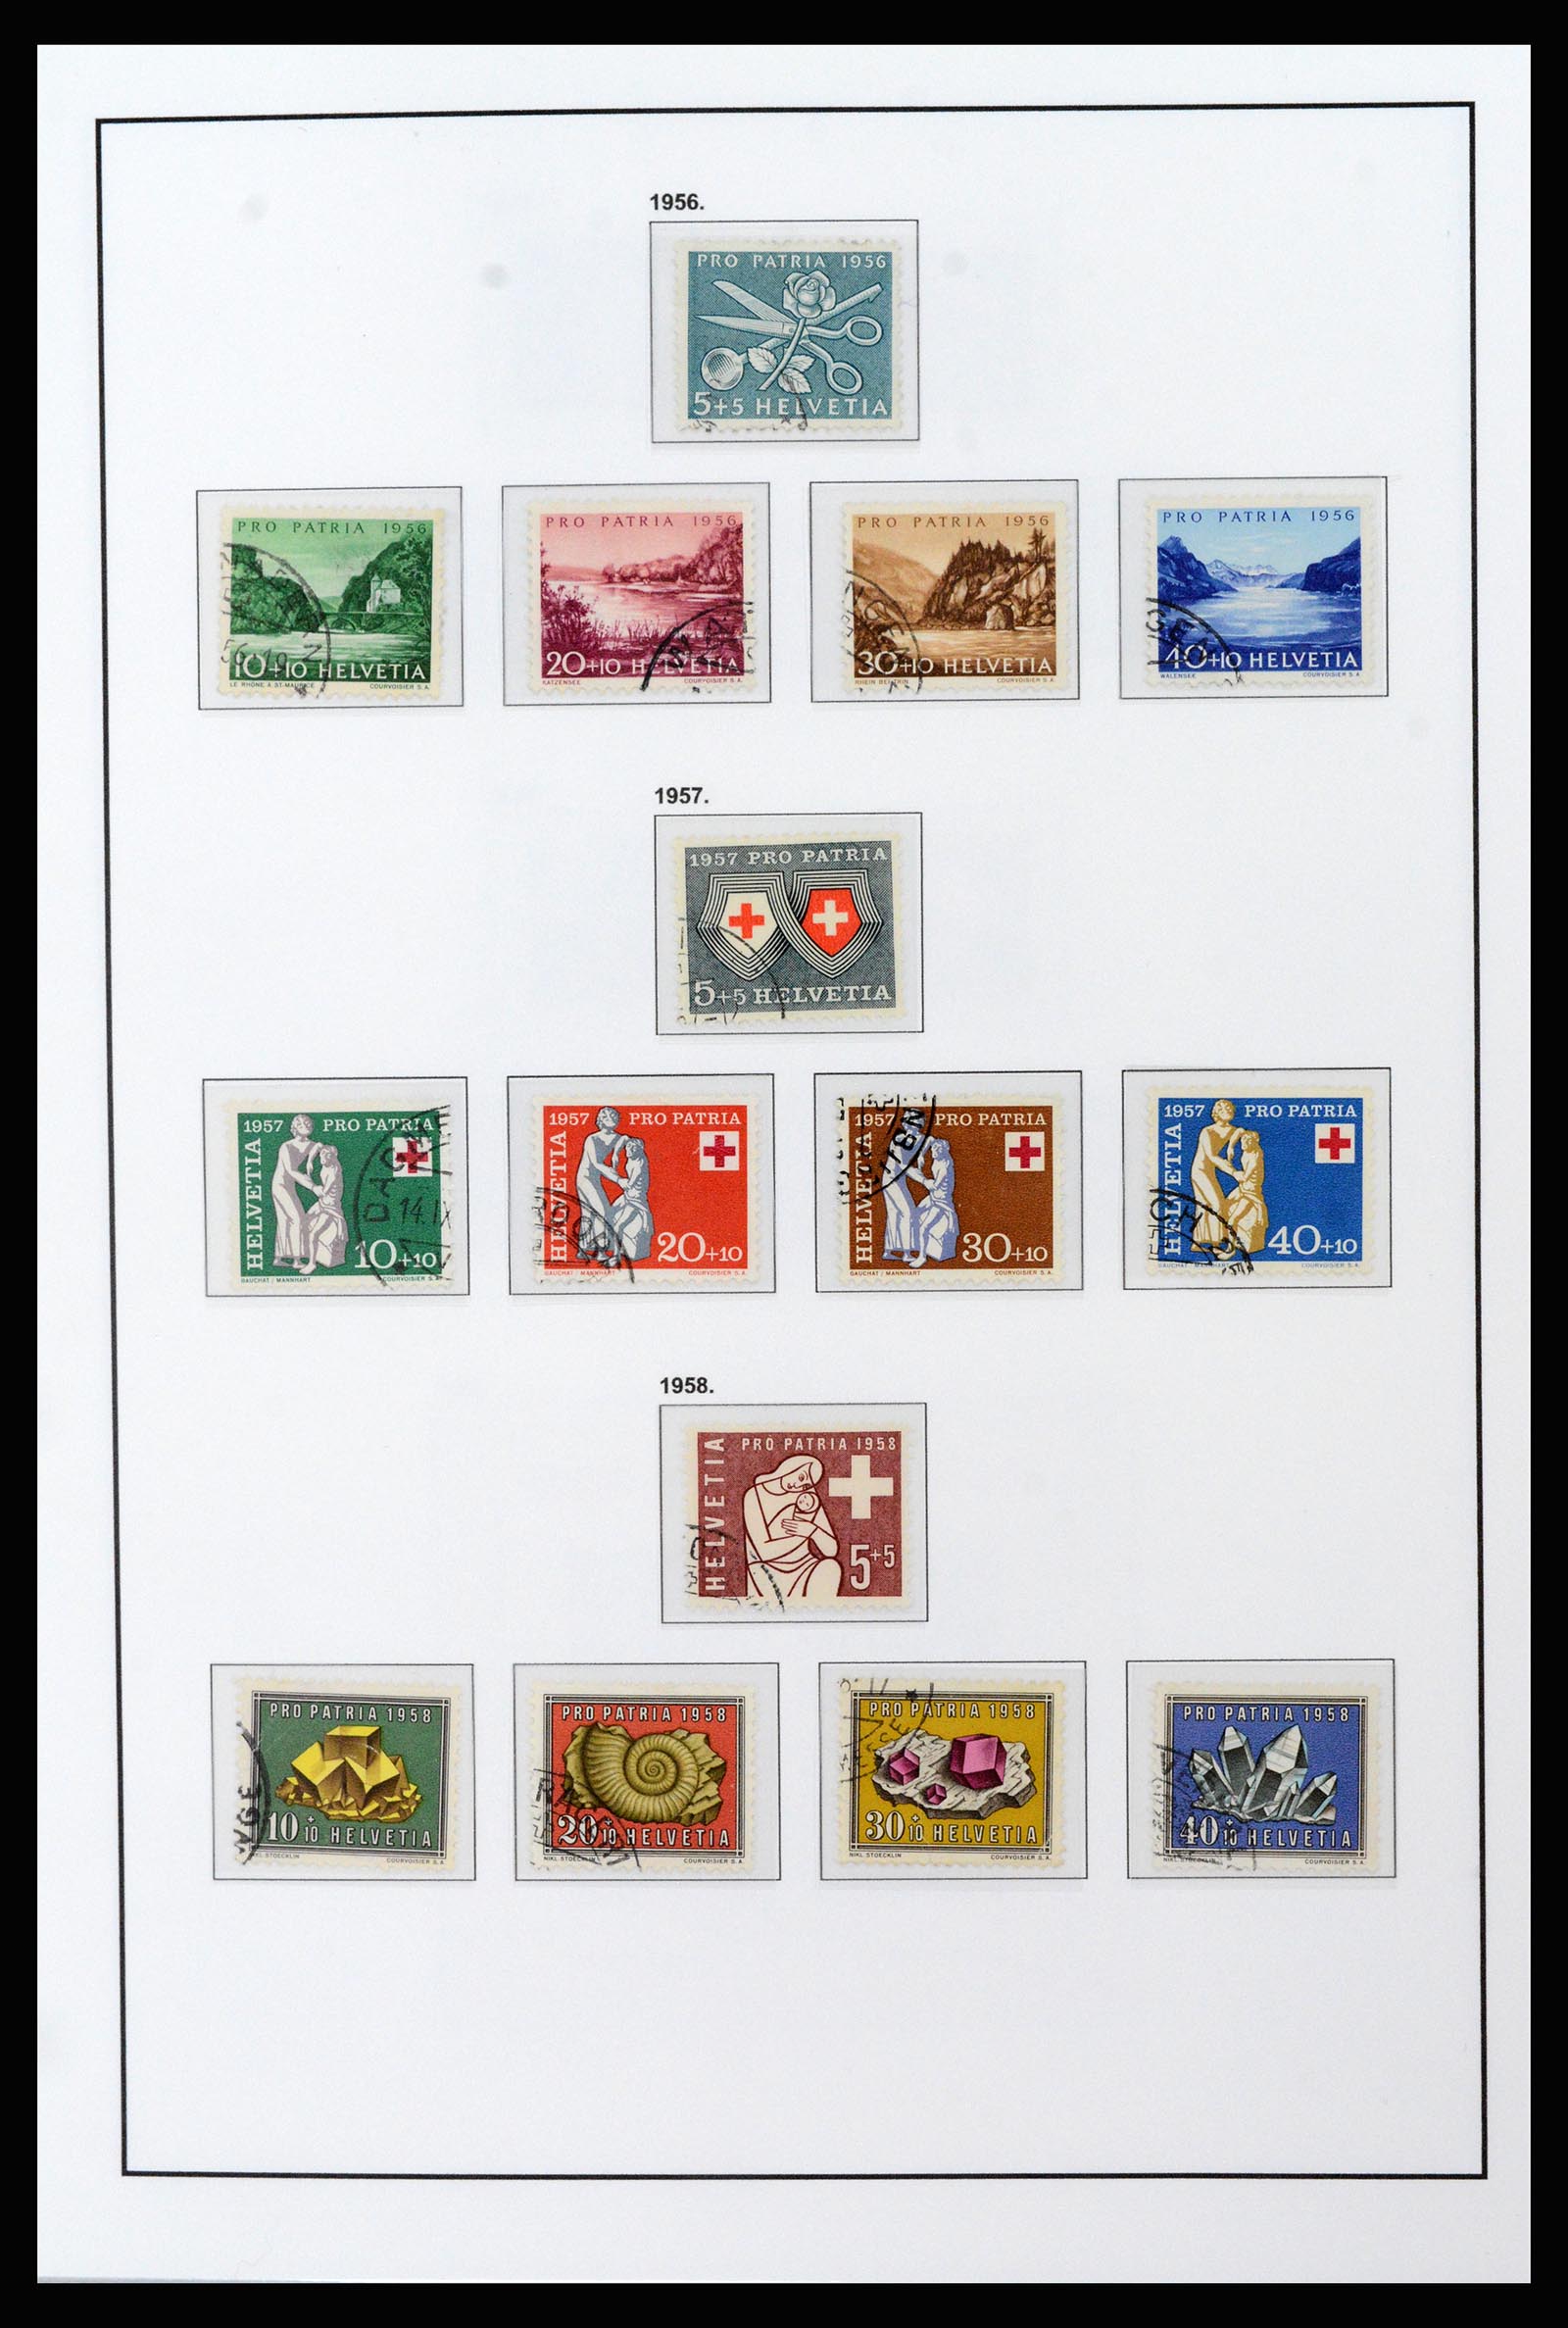 37225 081 - Stamp collection 37225 Switzerland 1854-2020.